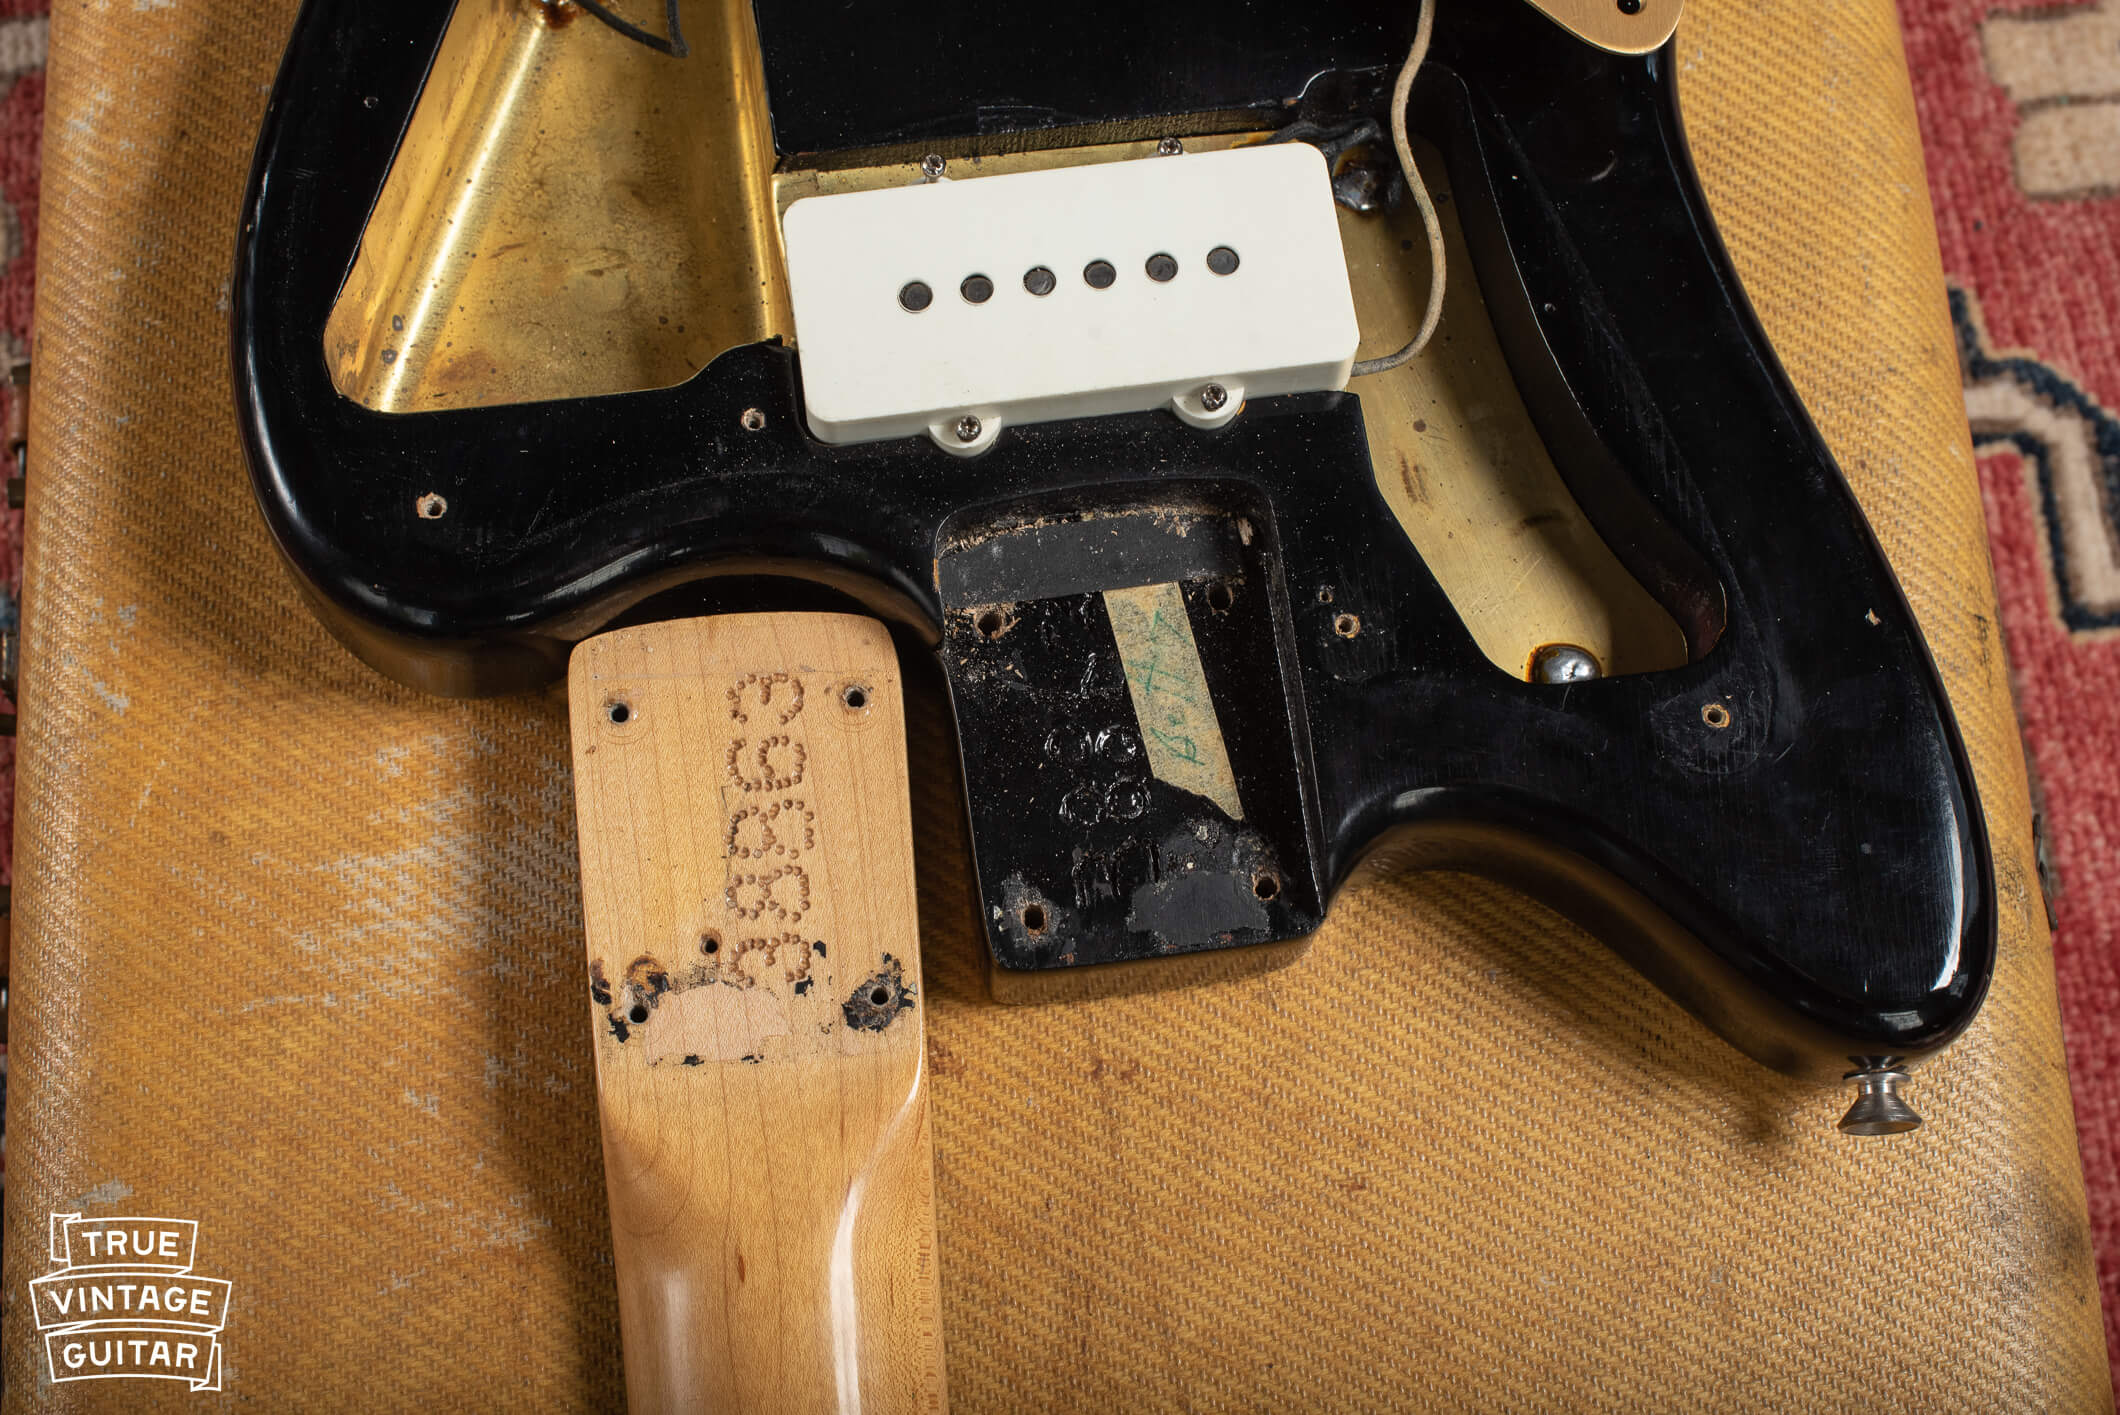 1959 Fender Jazzmaster Black finish factory update